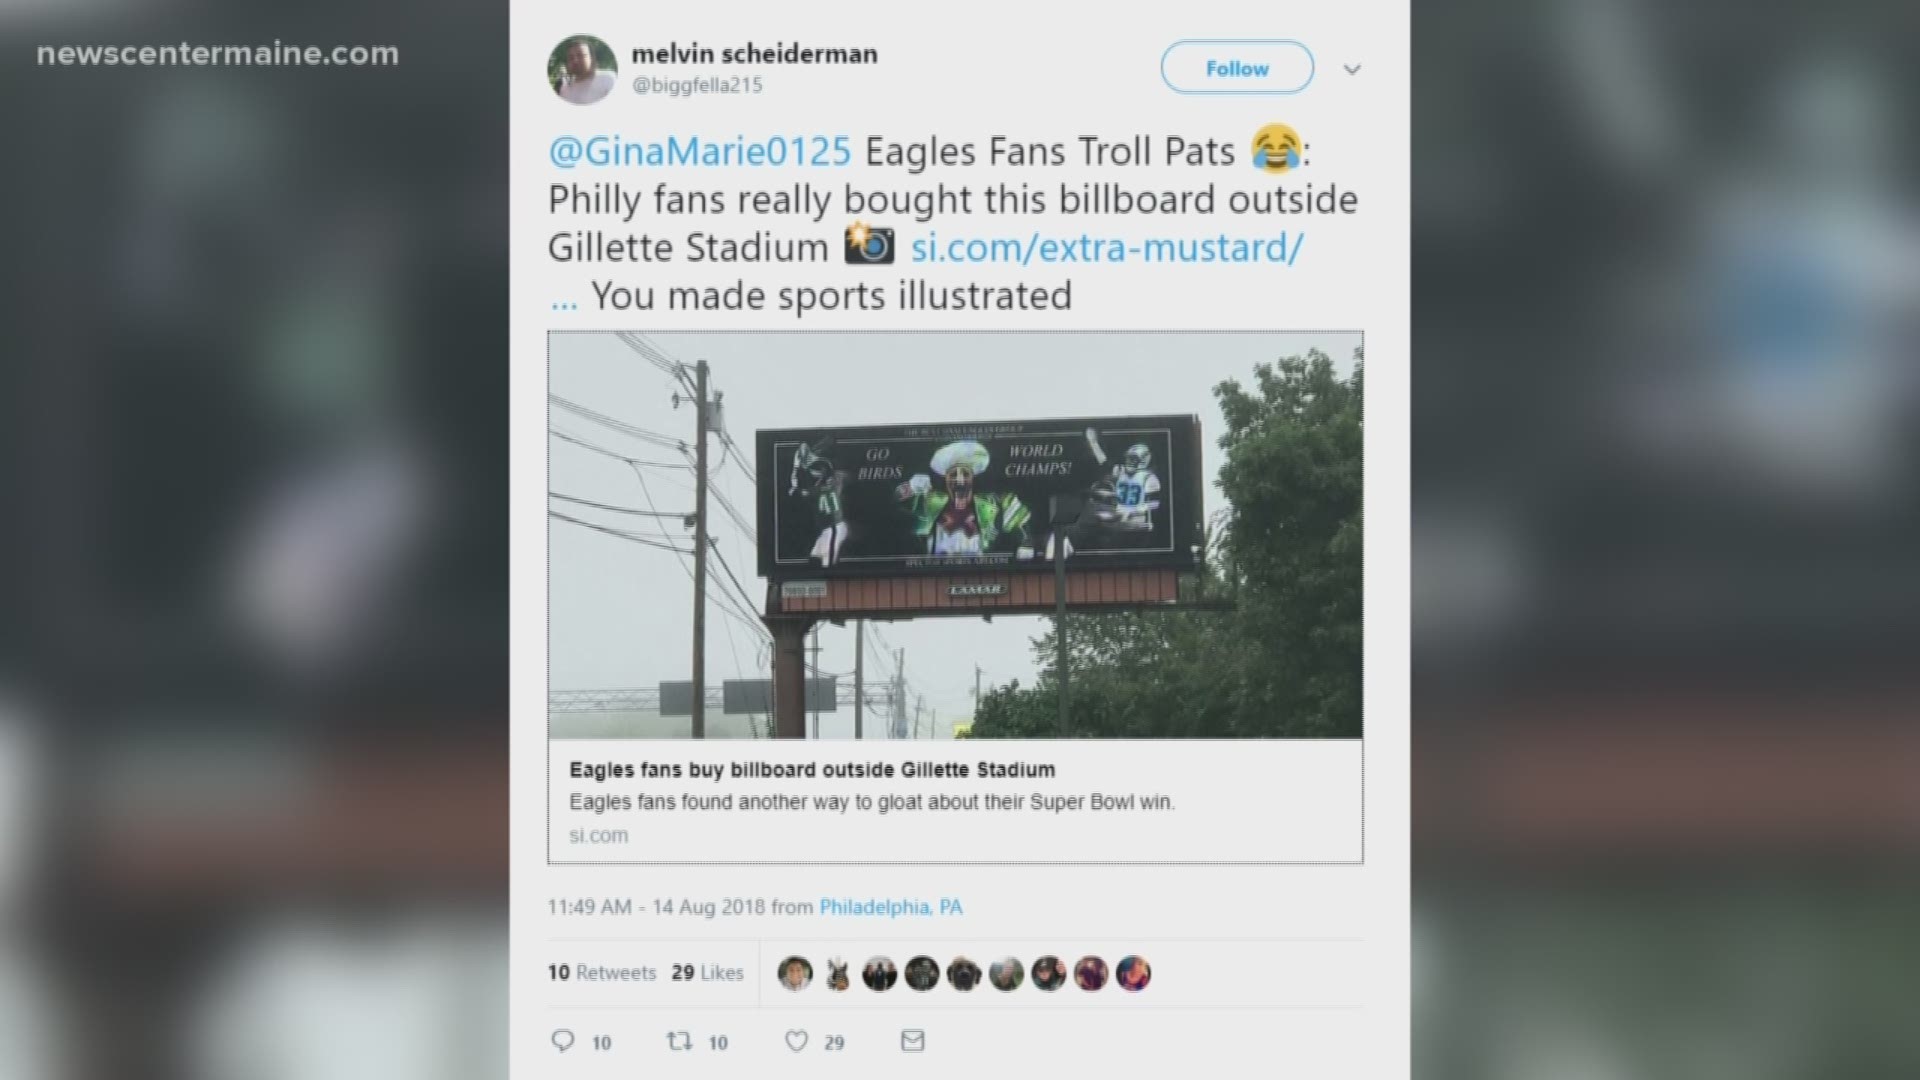 Eagles fans troll Pats with billboard outside Gillette Stadium